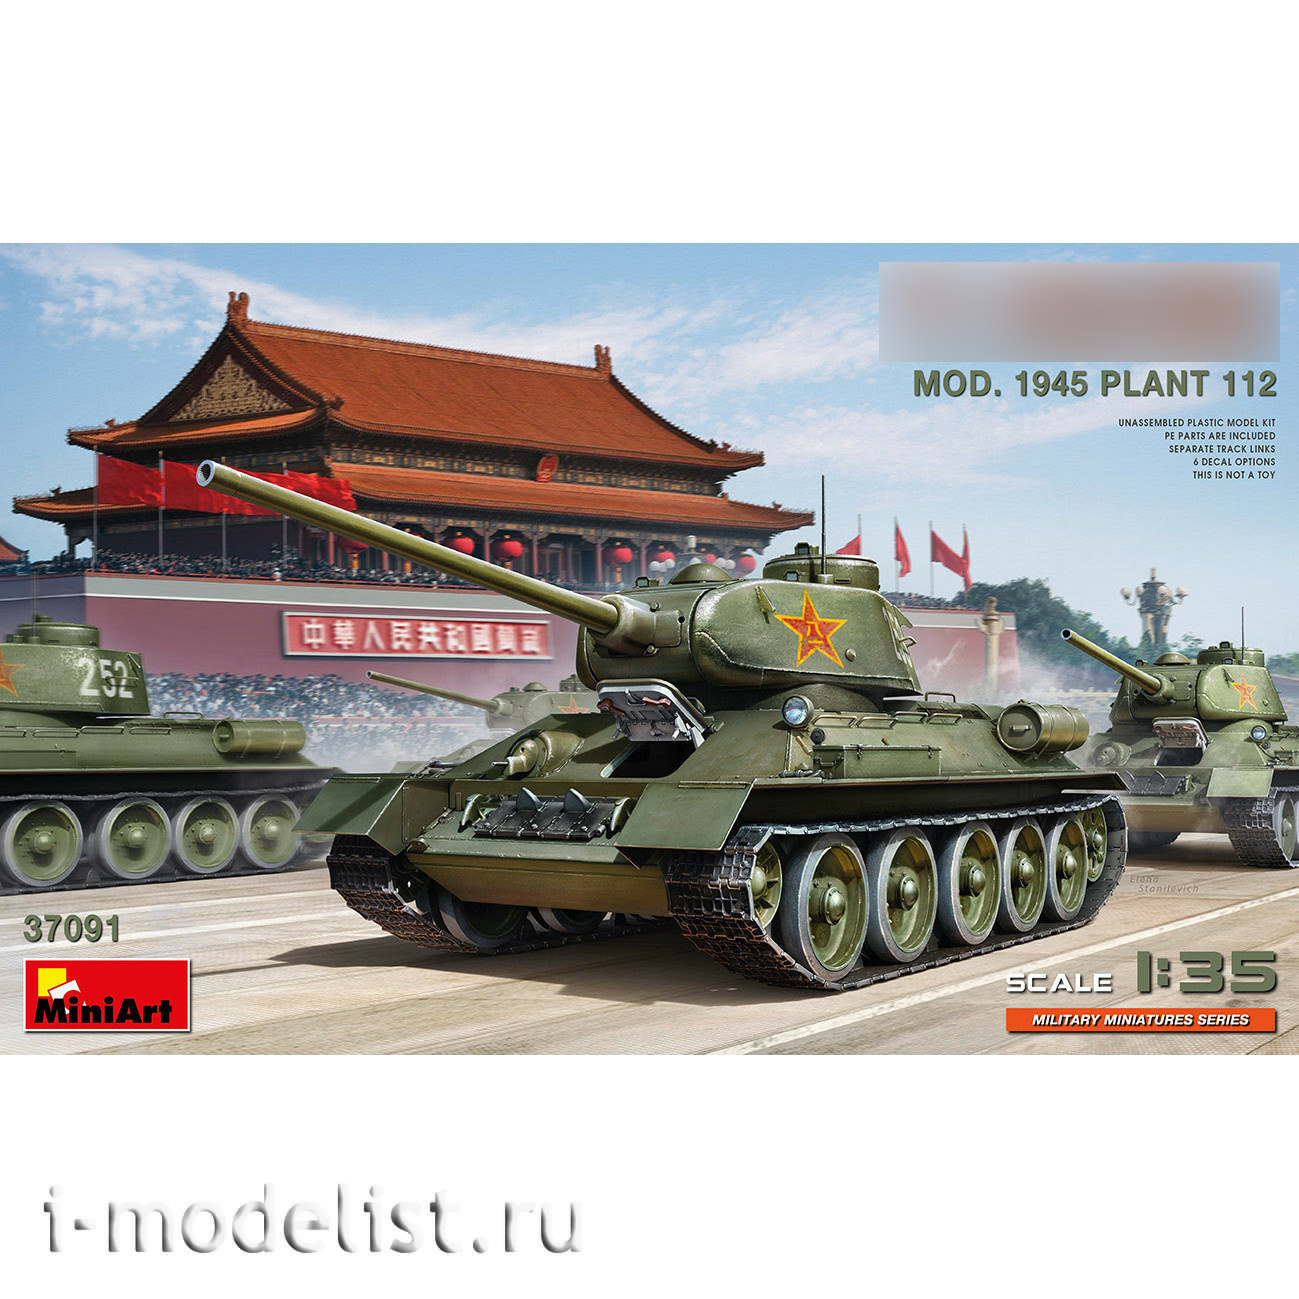 37091 MiniArt 1/35 Tank T-34/85 factory 112 (1945)